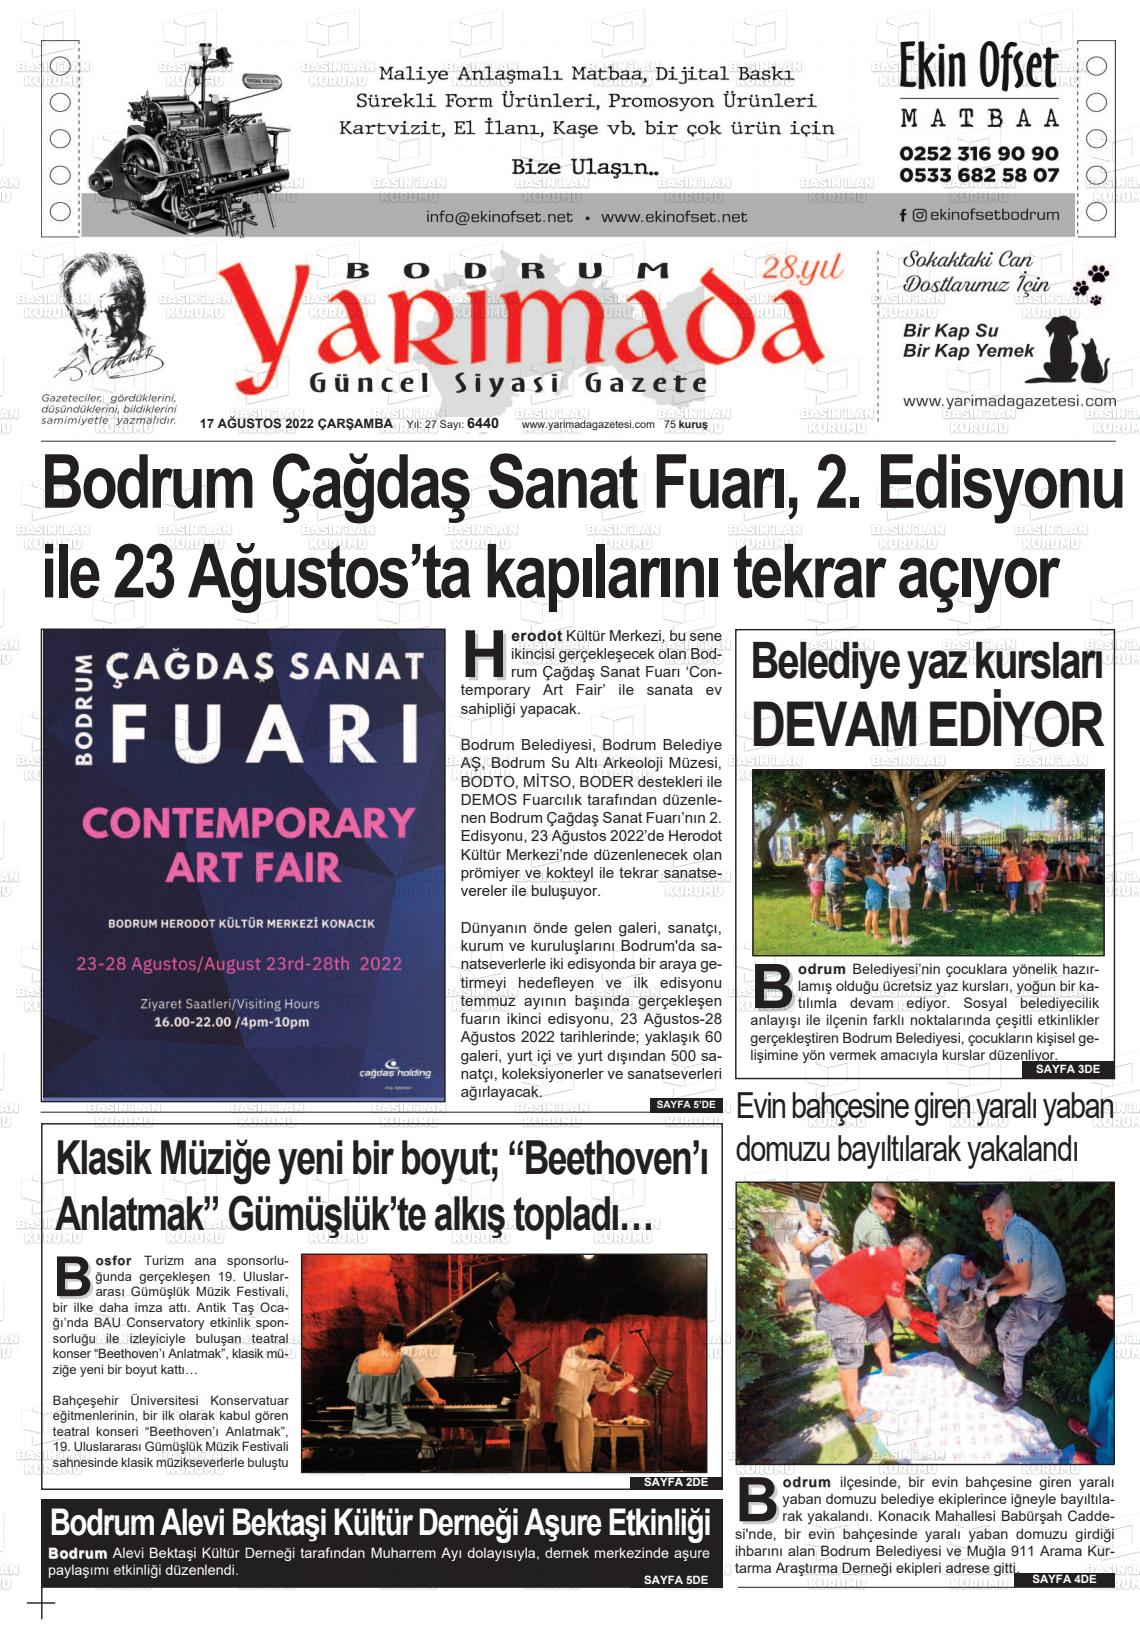 17 Ağustos 2022 Bodrum Yarimada Gazete Manşeti